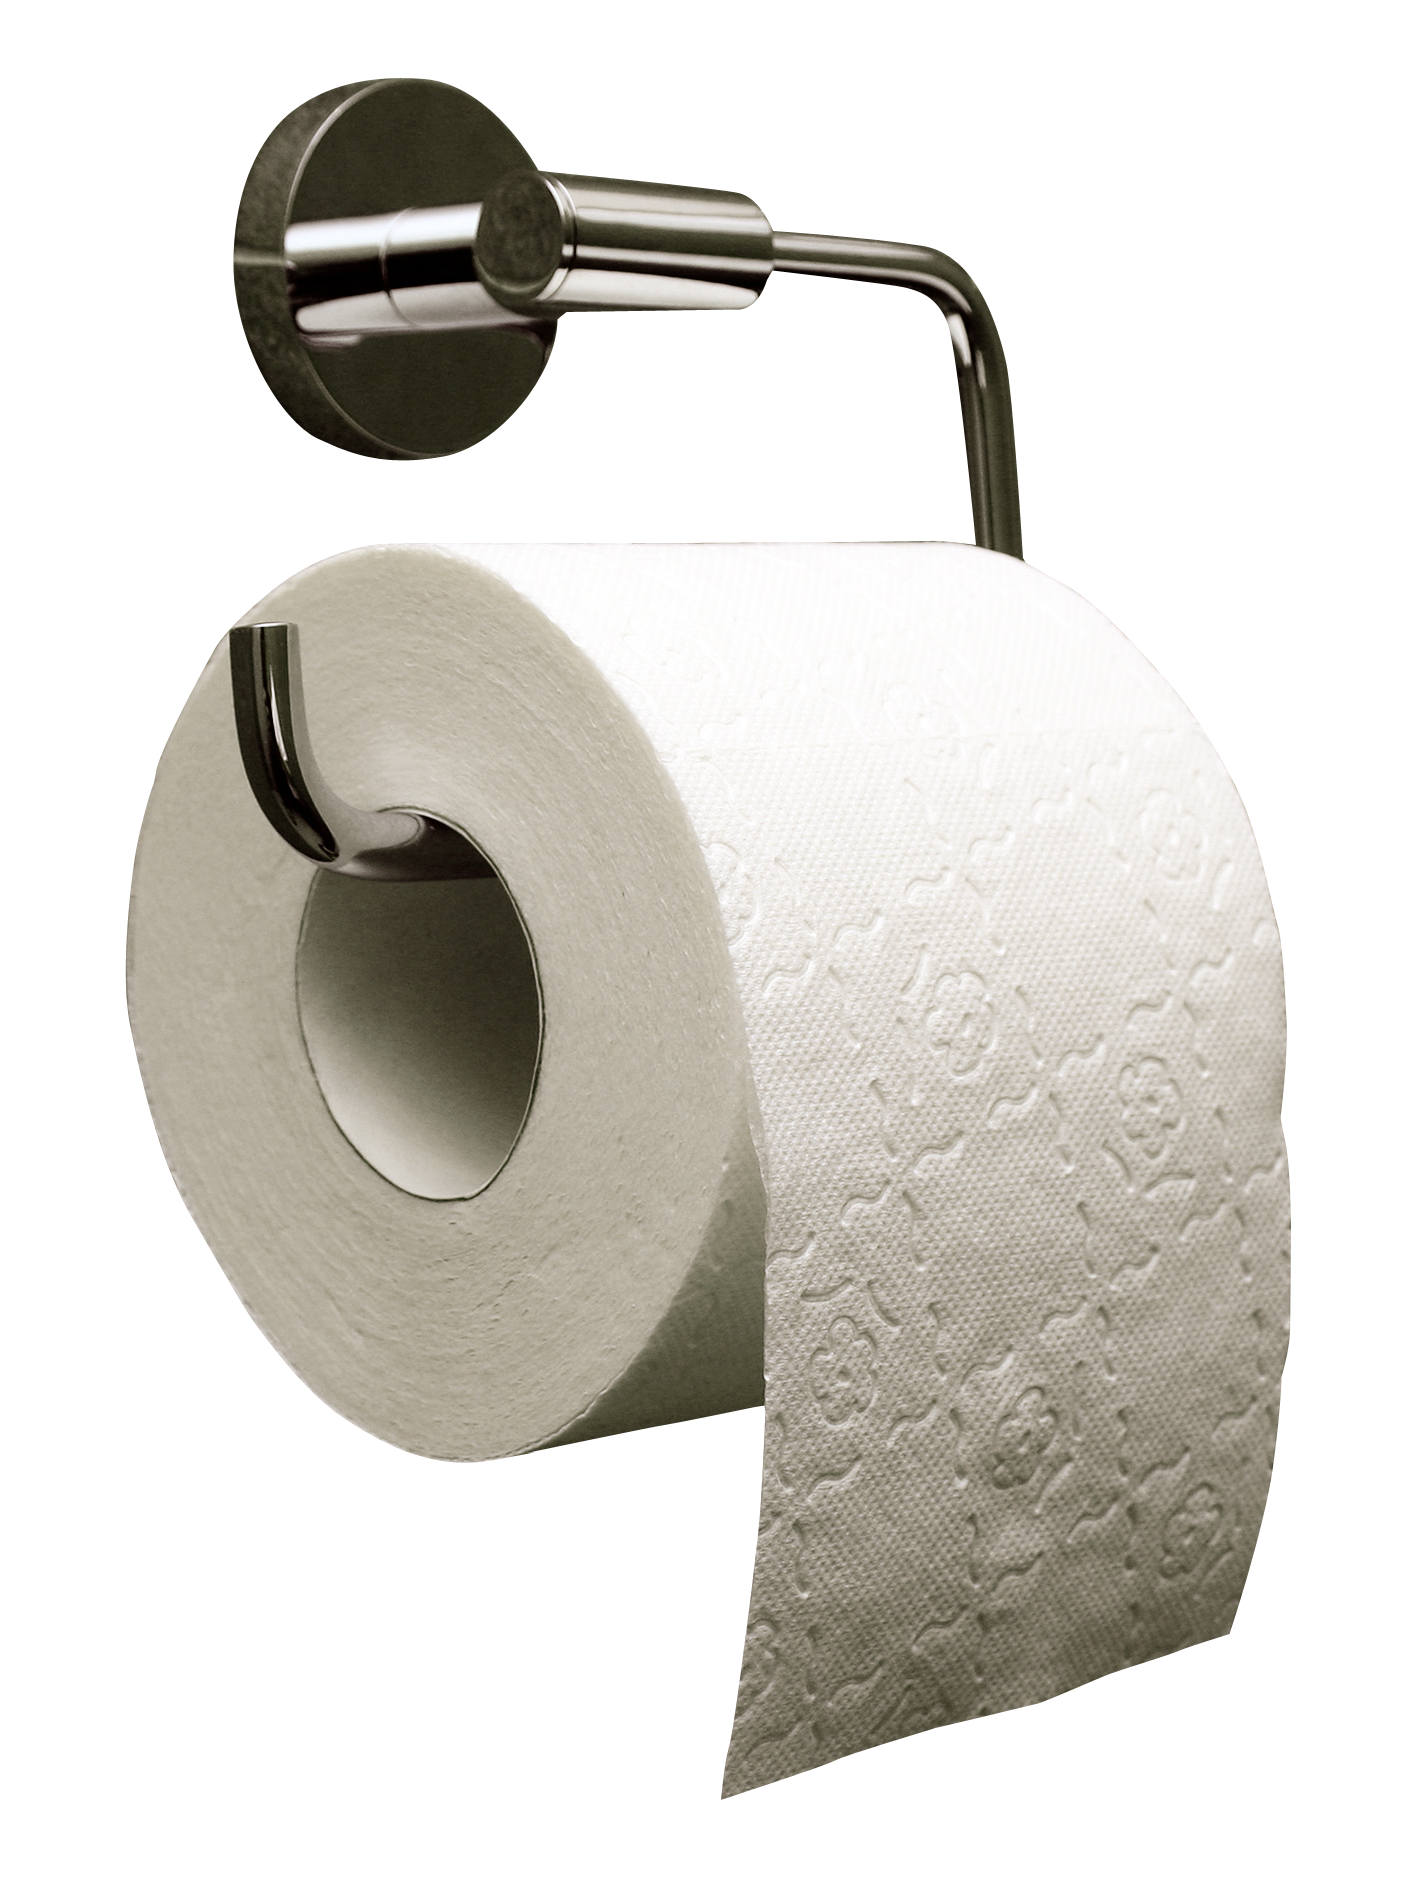 Toilet Paper Towel PNG Clipart